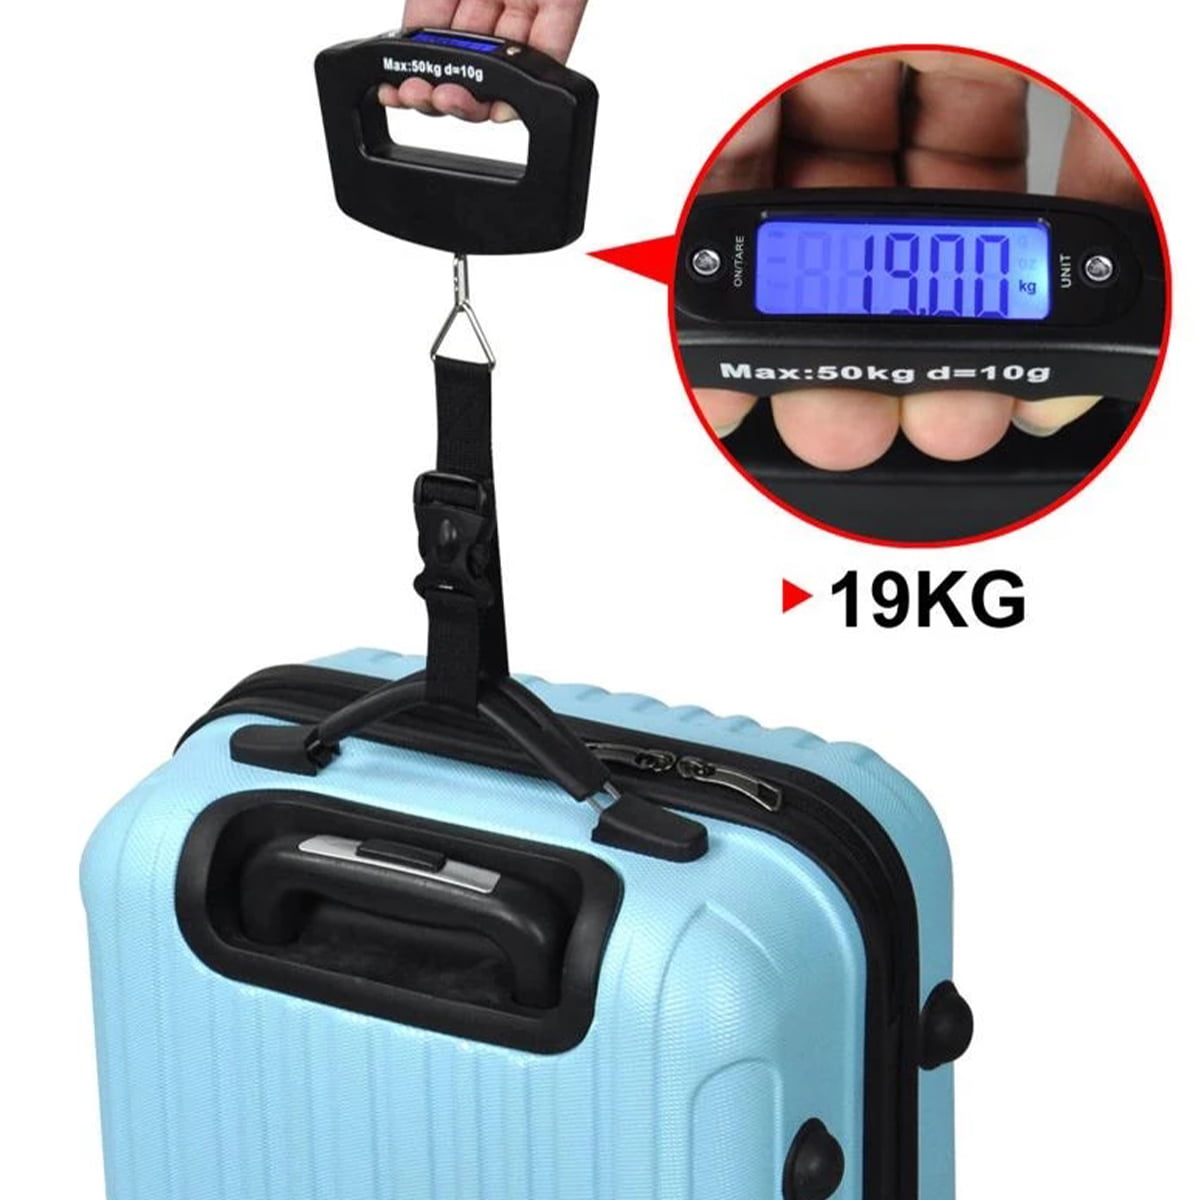  QUMOX High Precision Digital Travel Scale for Suitcase